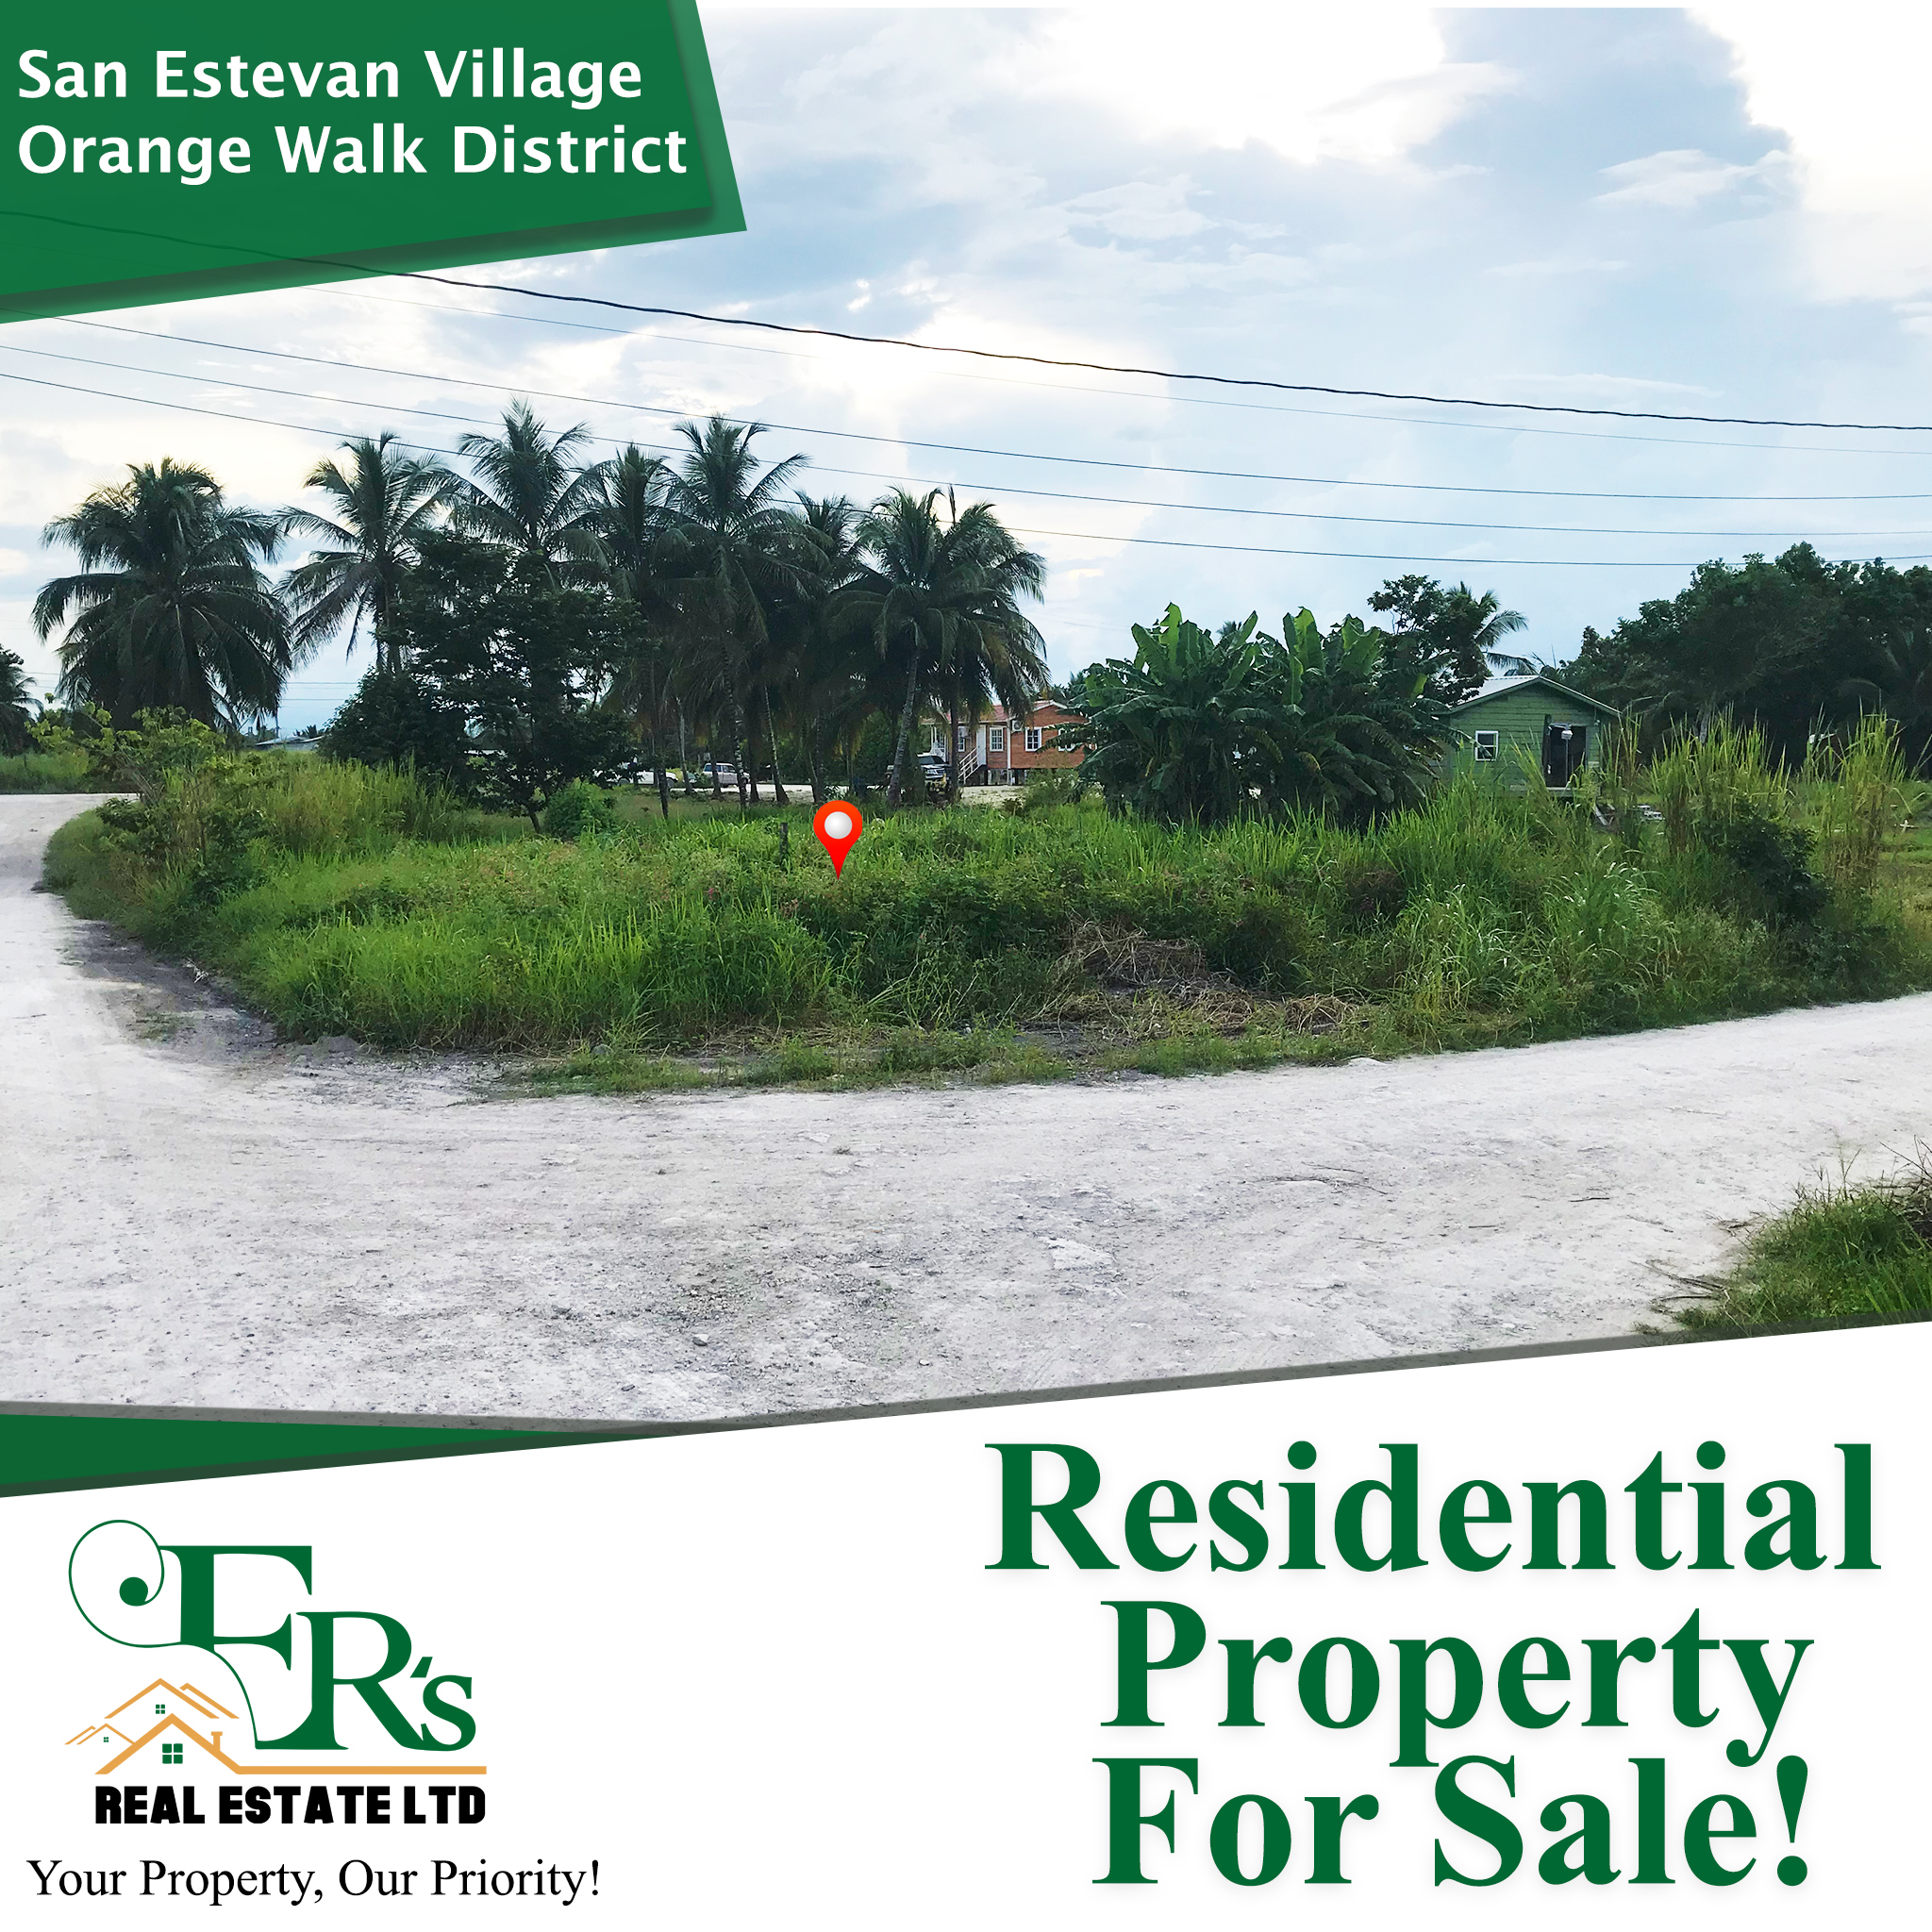 Residential Property In San Estevan Village, Orange Walk